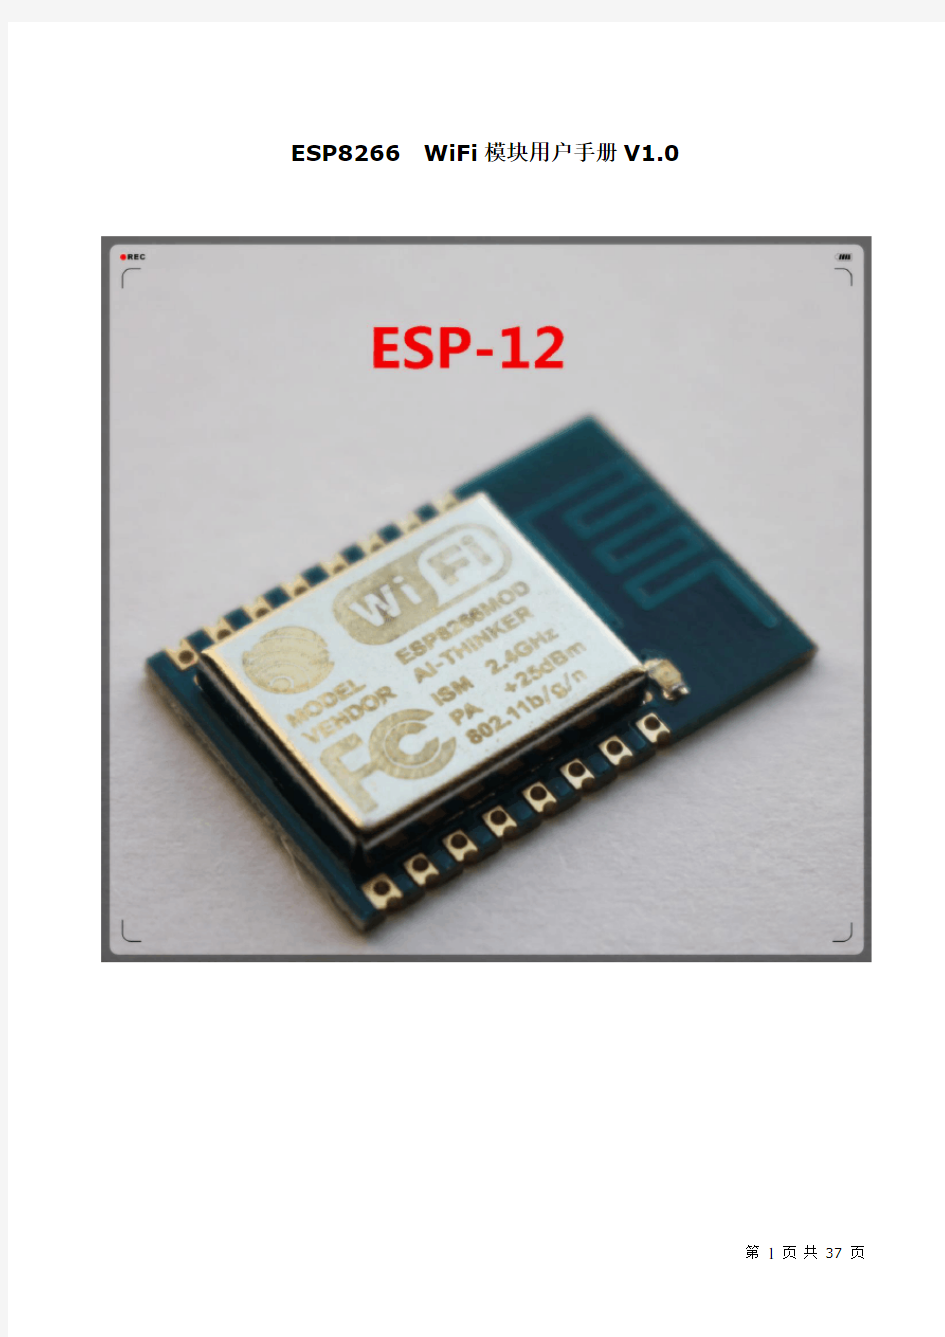 ESP8266-12 WiFi模块用户手册V1.0